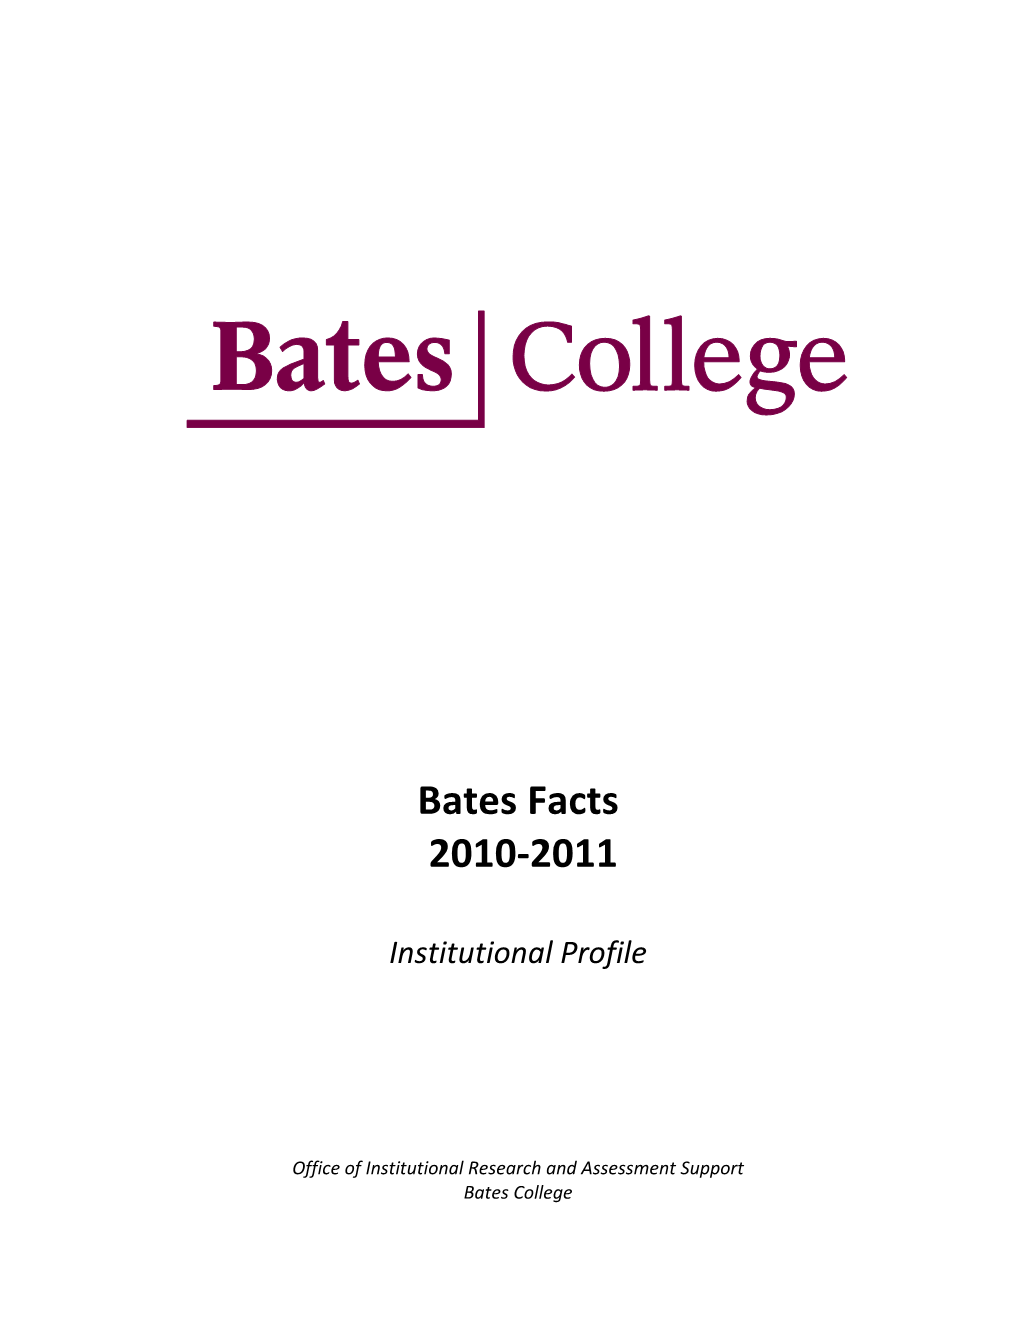 Bates Facts 2010-2011